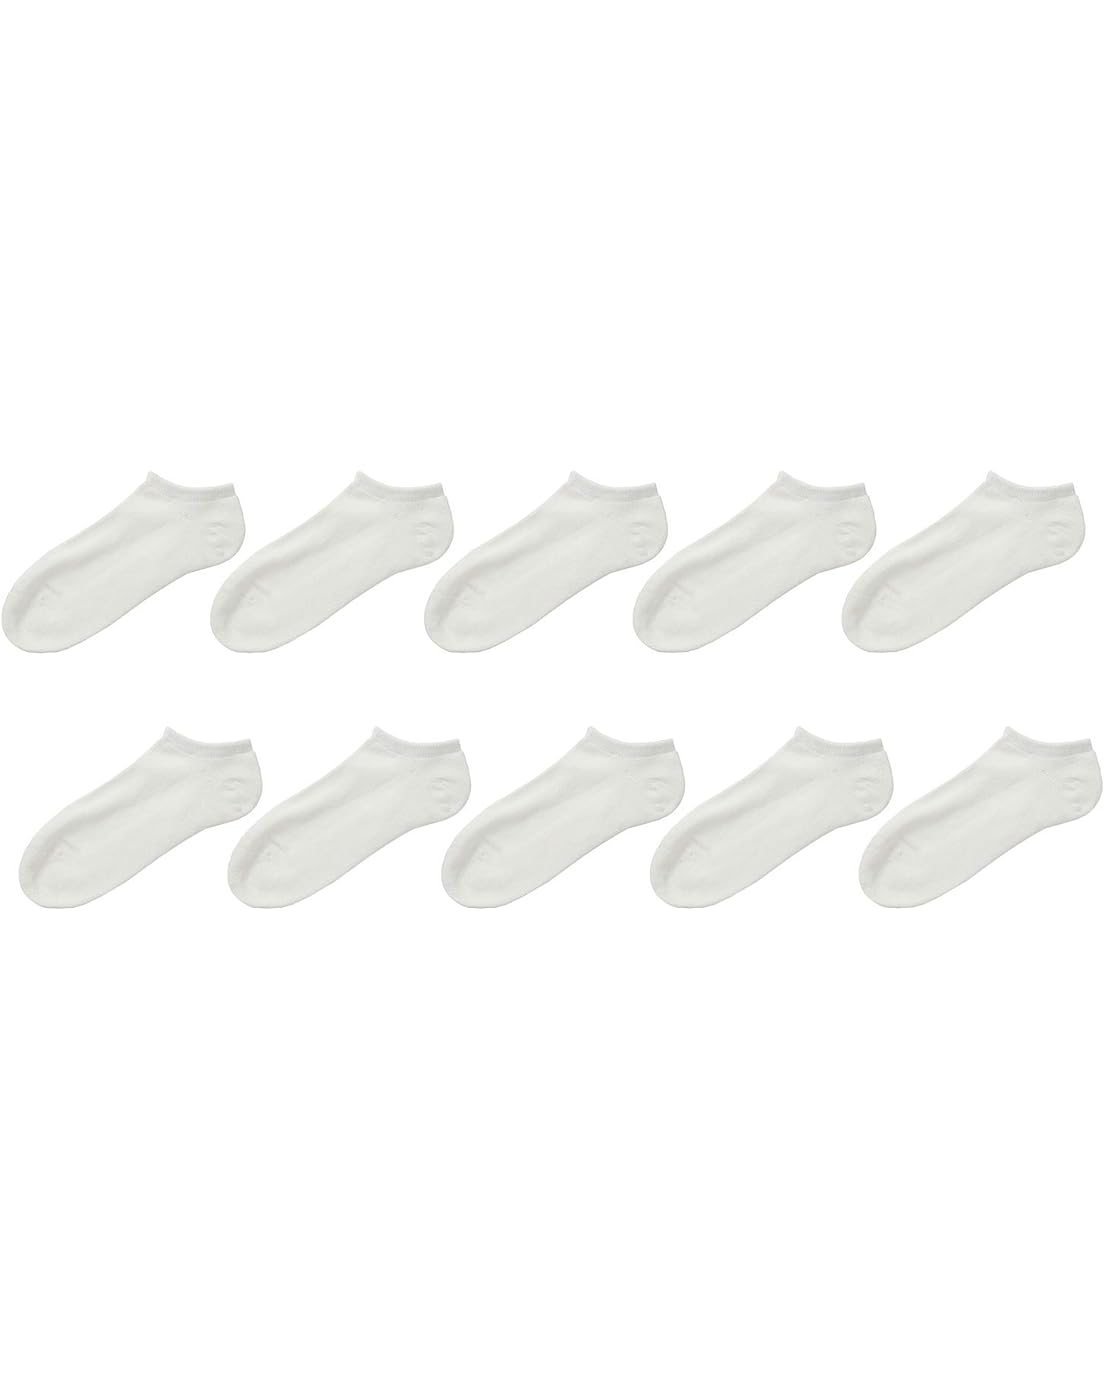 Jefferies Socks Seamless Sport Low Cut 9-Pack (Infant/Toddler/Little Kid/Big Kid/Adult)